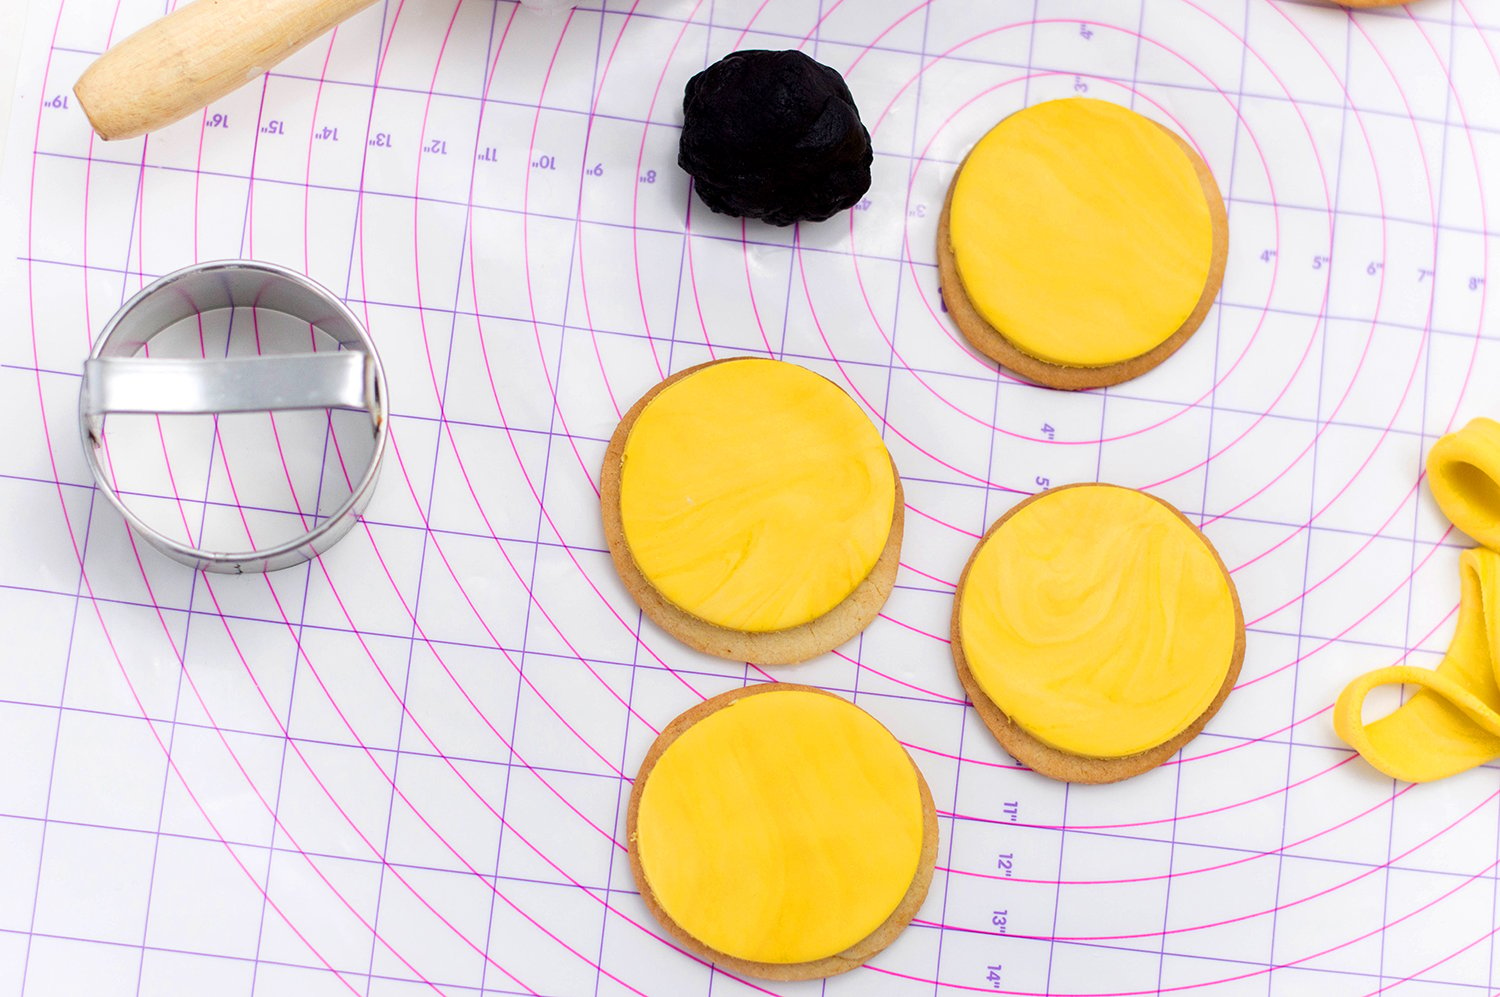 placing circular shapes onto baked cookies